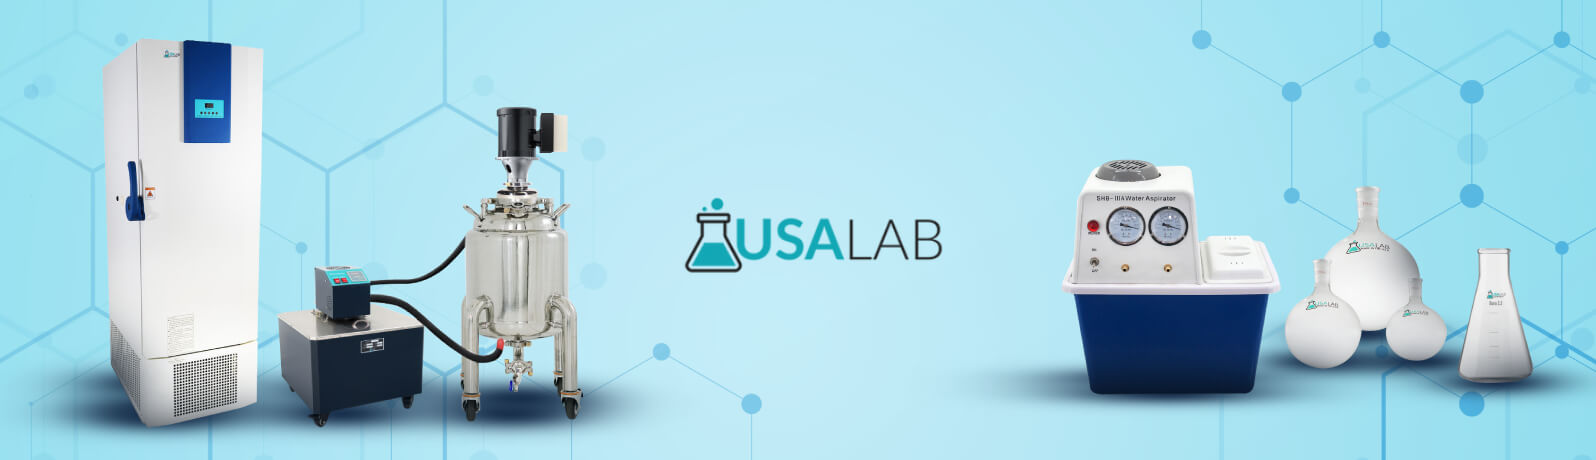 USA Lab